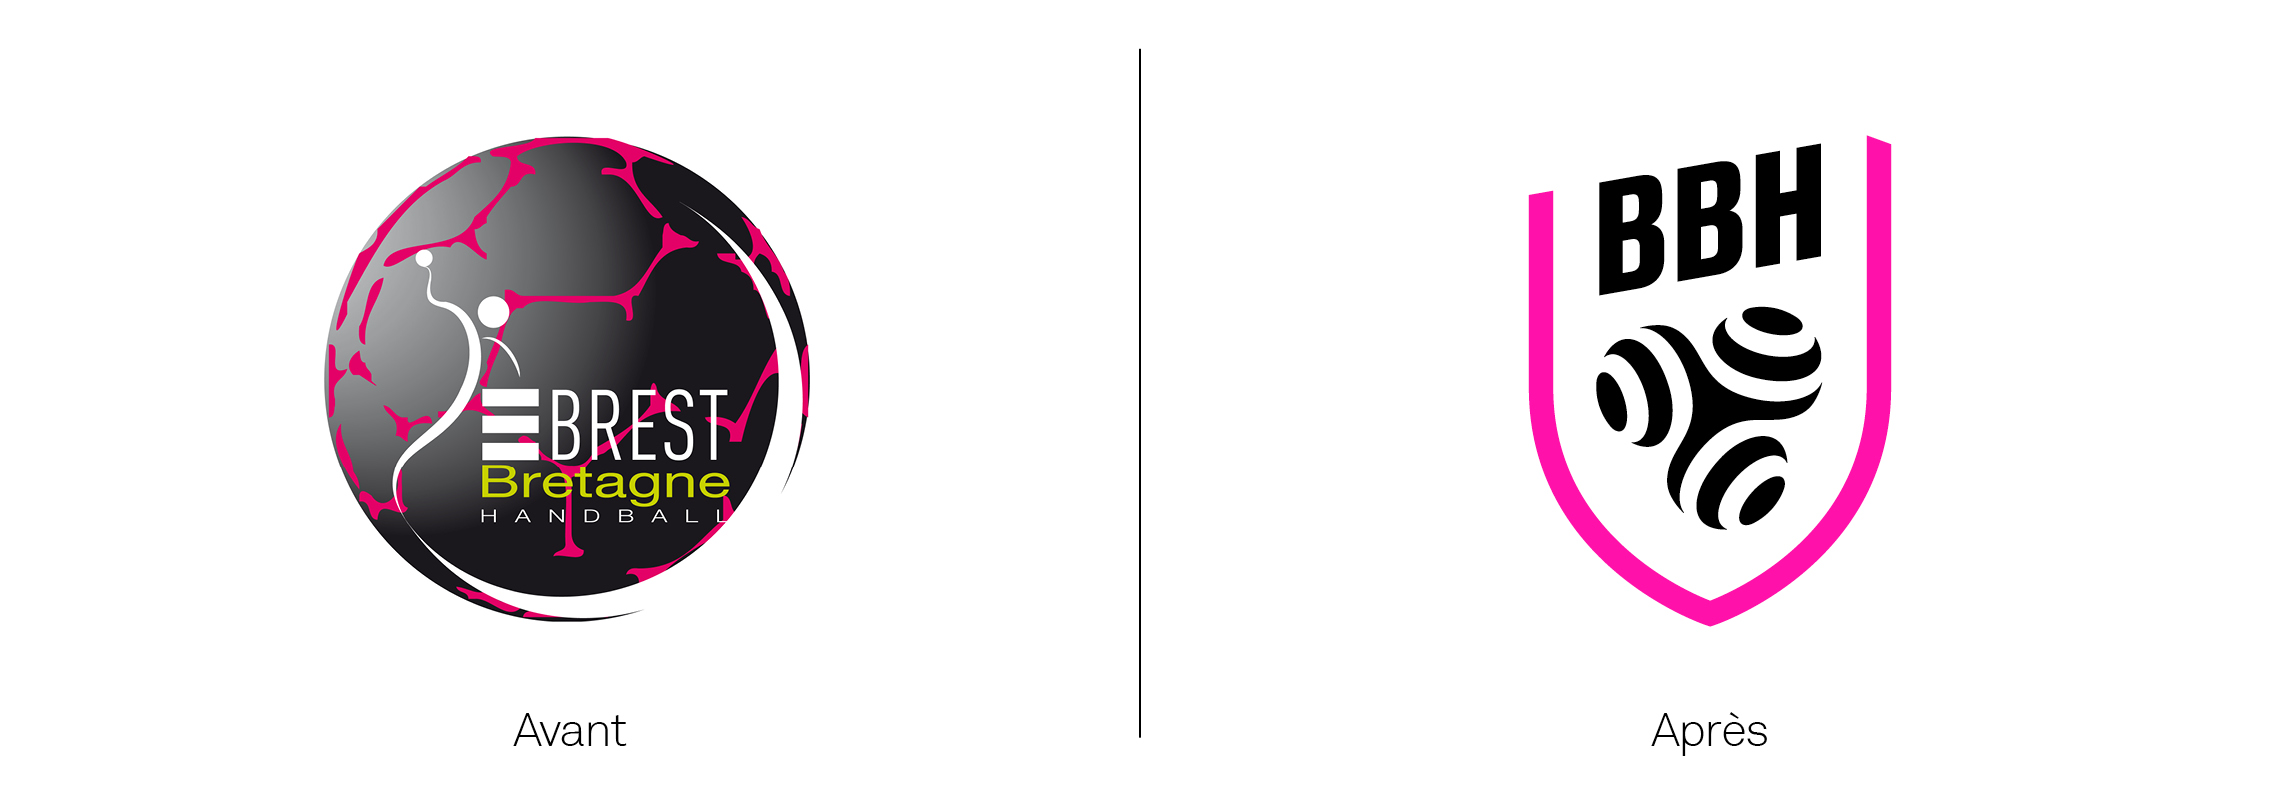 nouveau-logo-handball-BBH-triskell